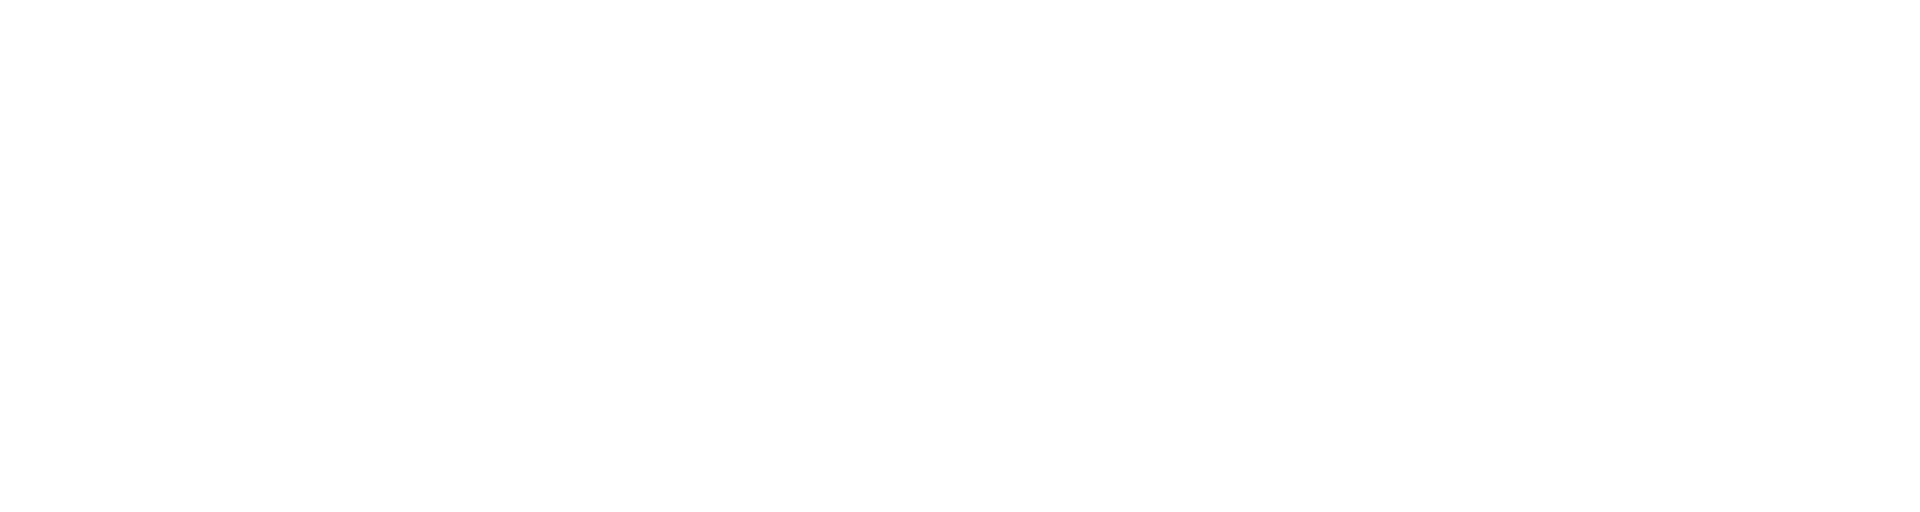 Sim Family Dental white logo